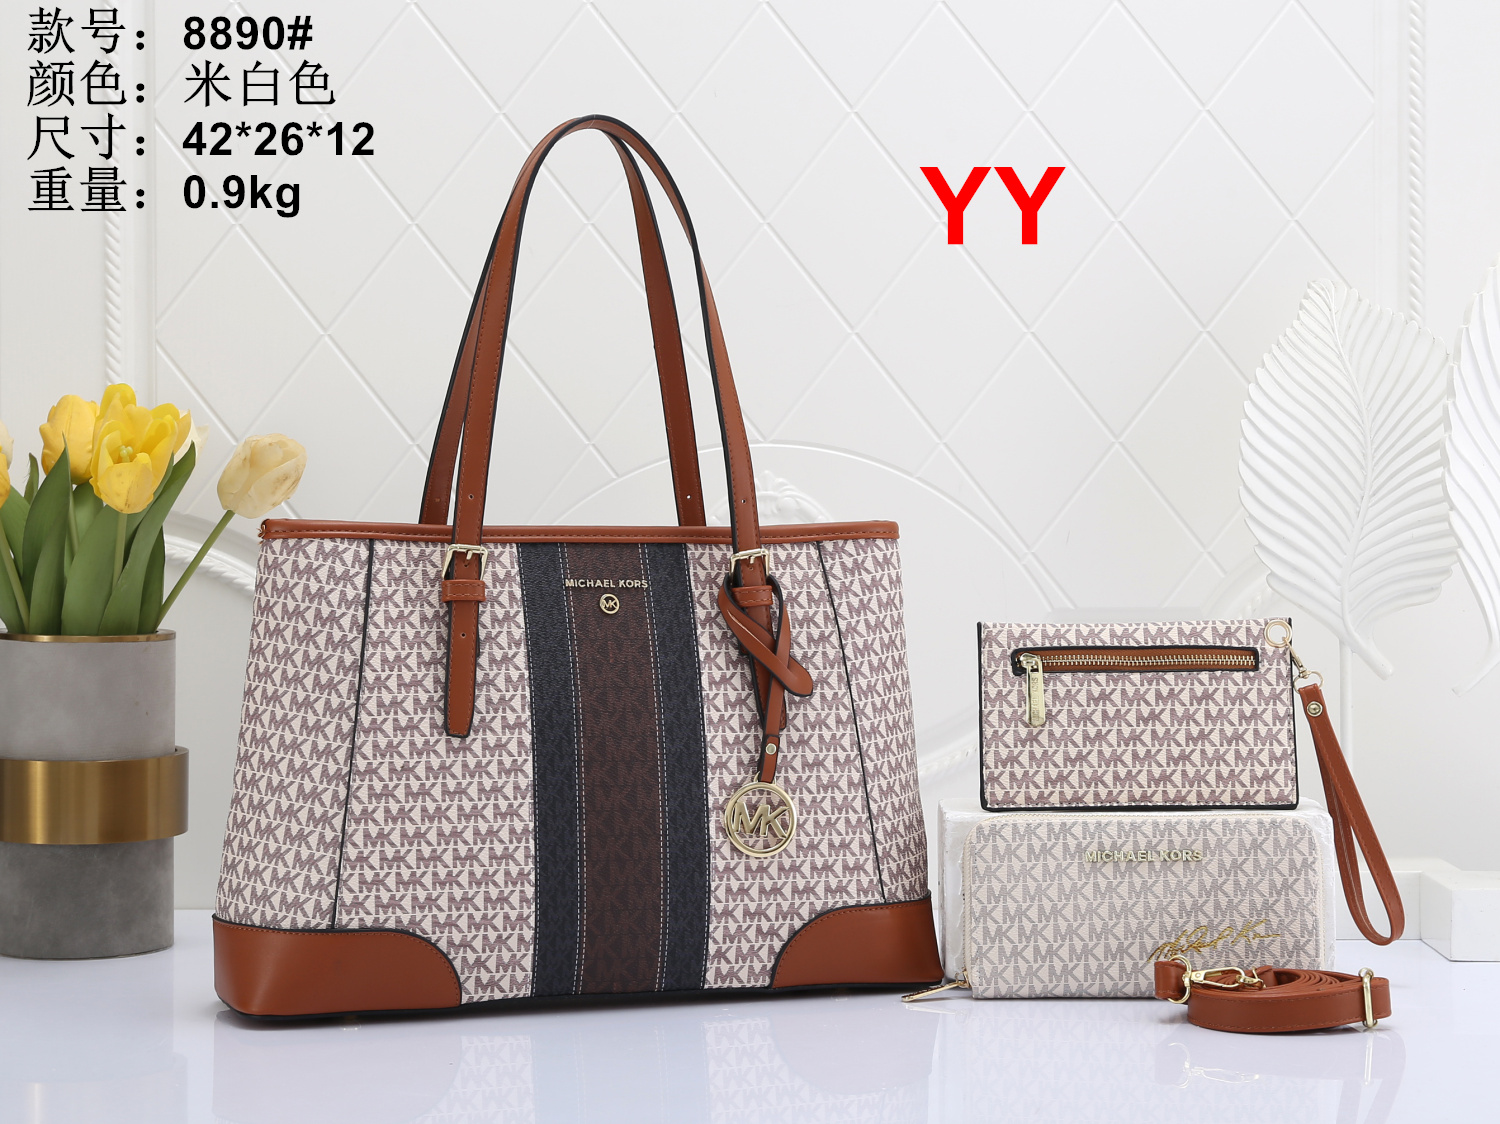 Coach Handbags For Women # 264825, cheap C*ach Handbags, only $55!